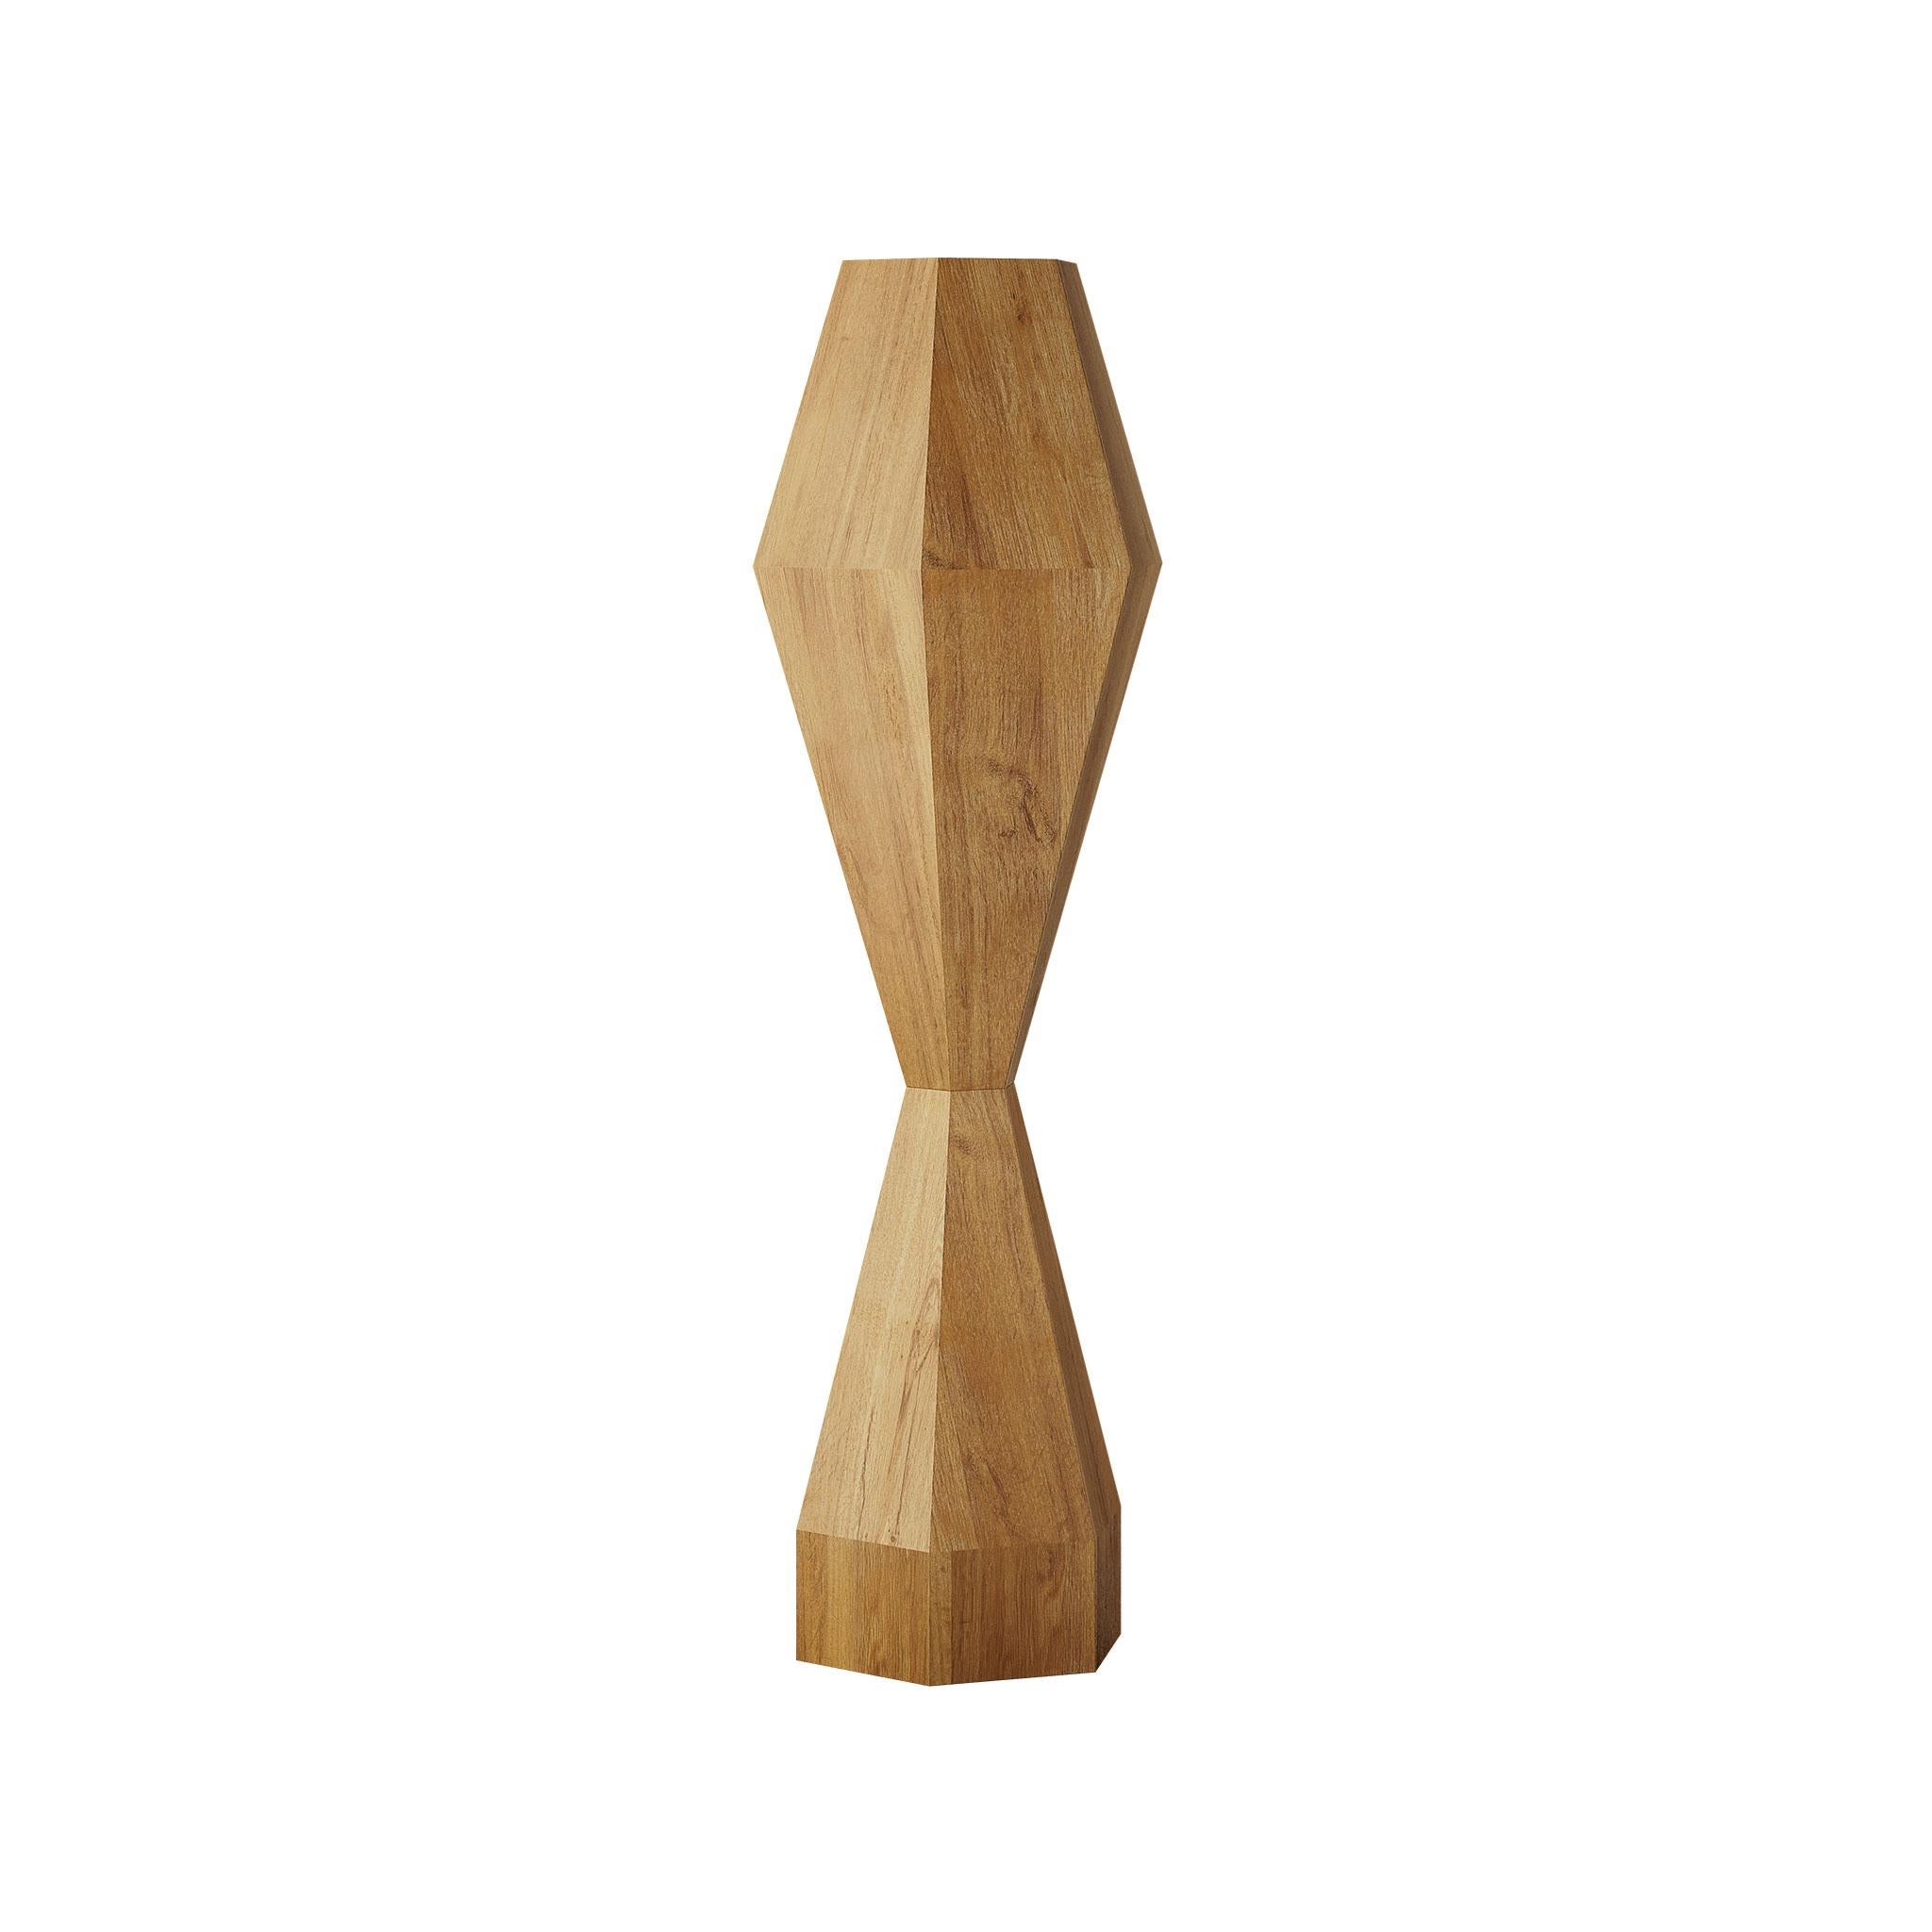 European Modern Customizable Faceted Wood Totem Sculpture Pole in Oak Matte Veneer For Sale